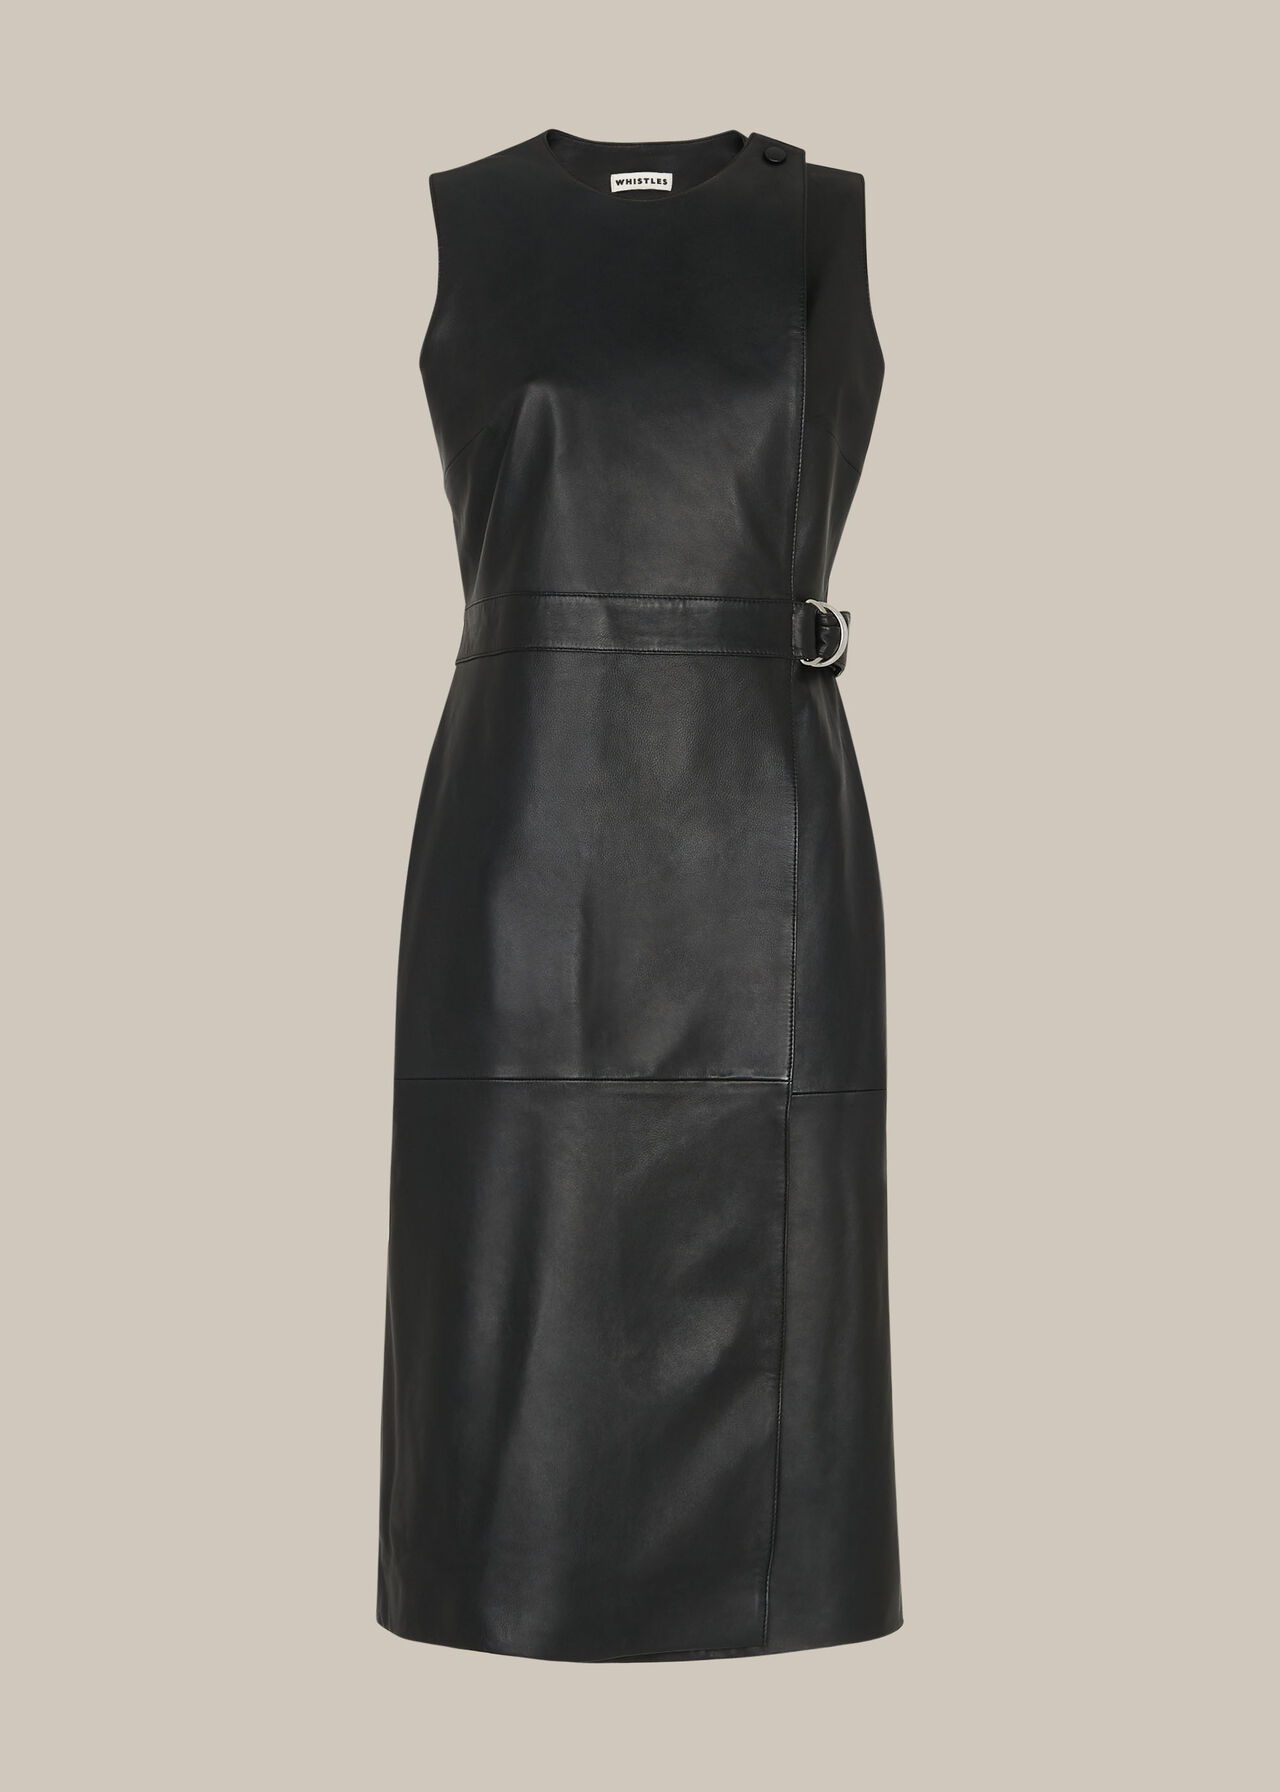 Black Leather Shift Dress | WHISTLES